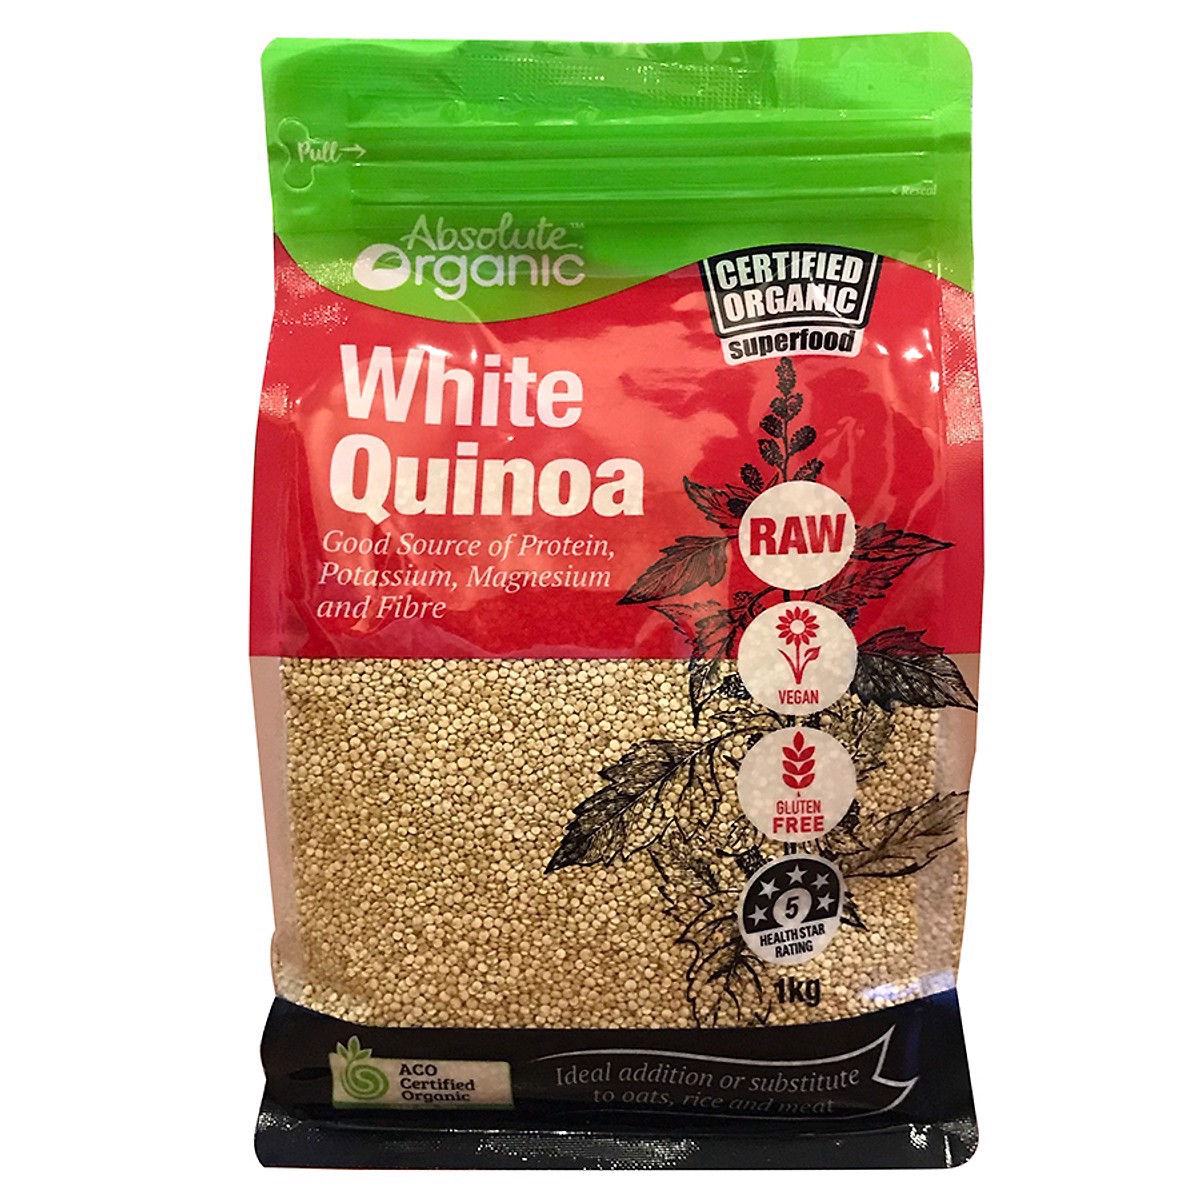 Absolute Organic Quinoa White (400g)